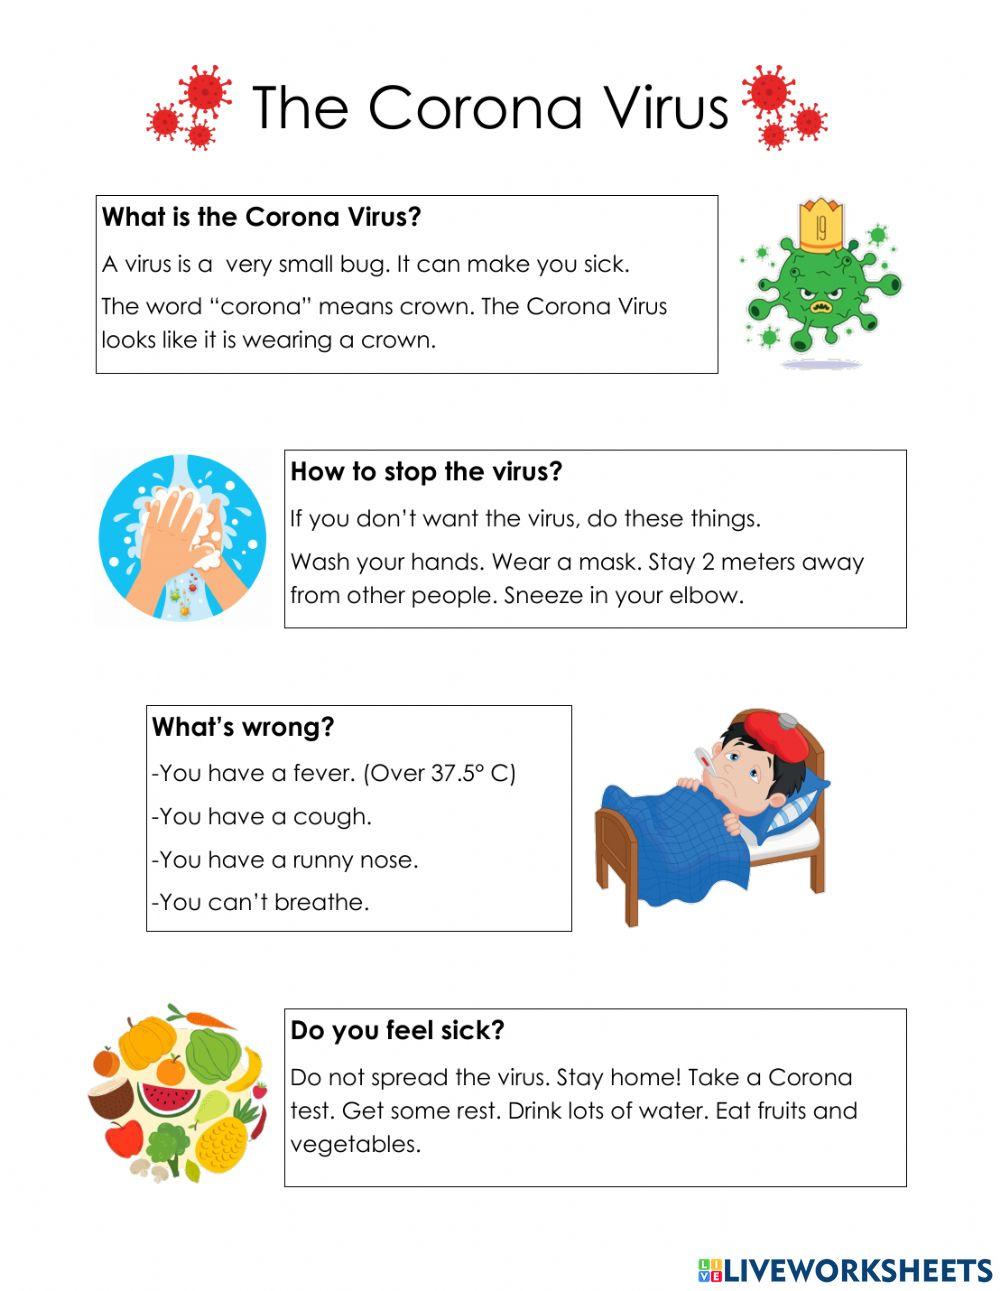 Lesson 2. The Corona Virus